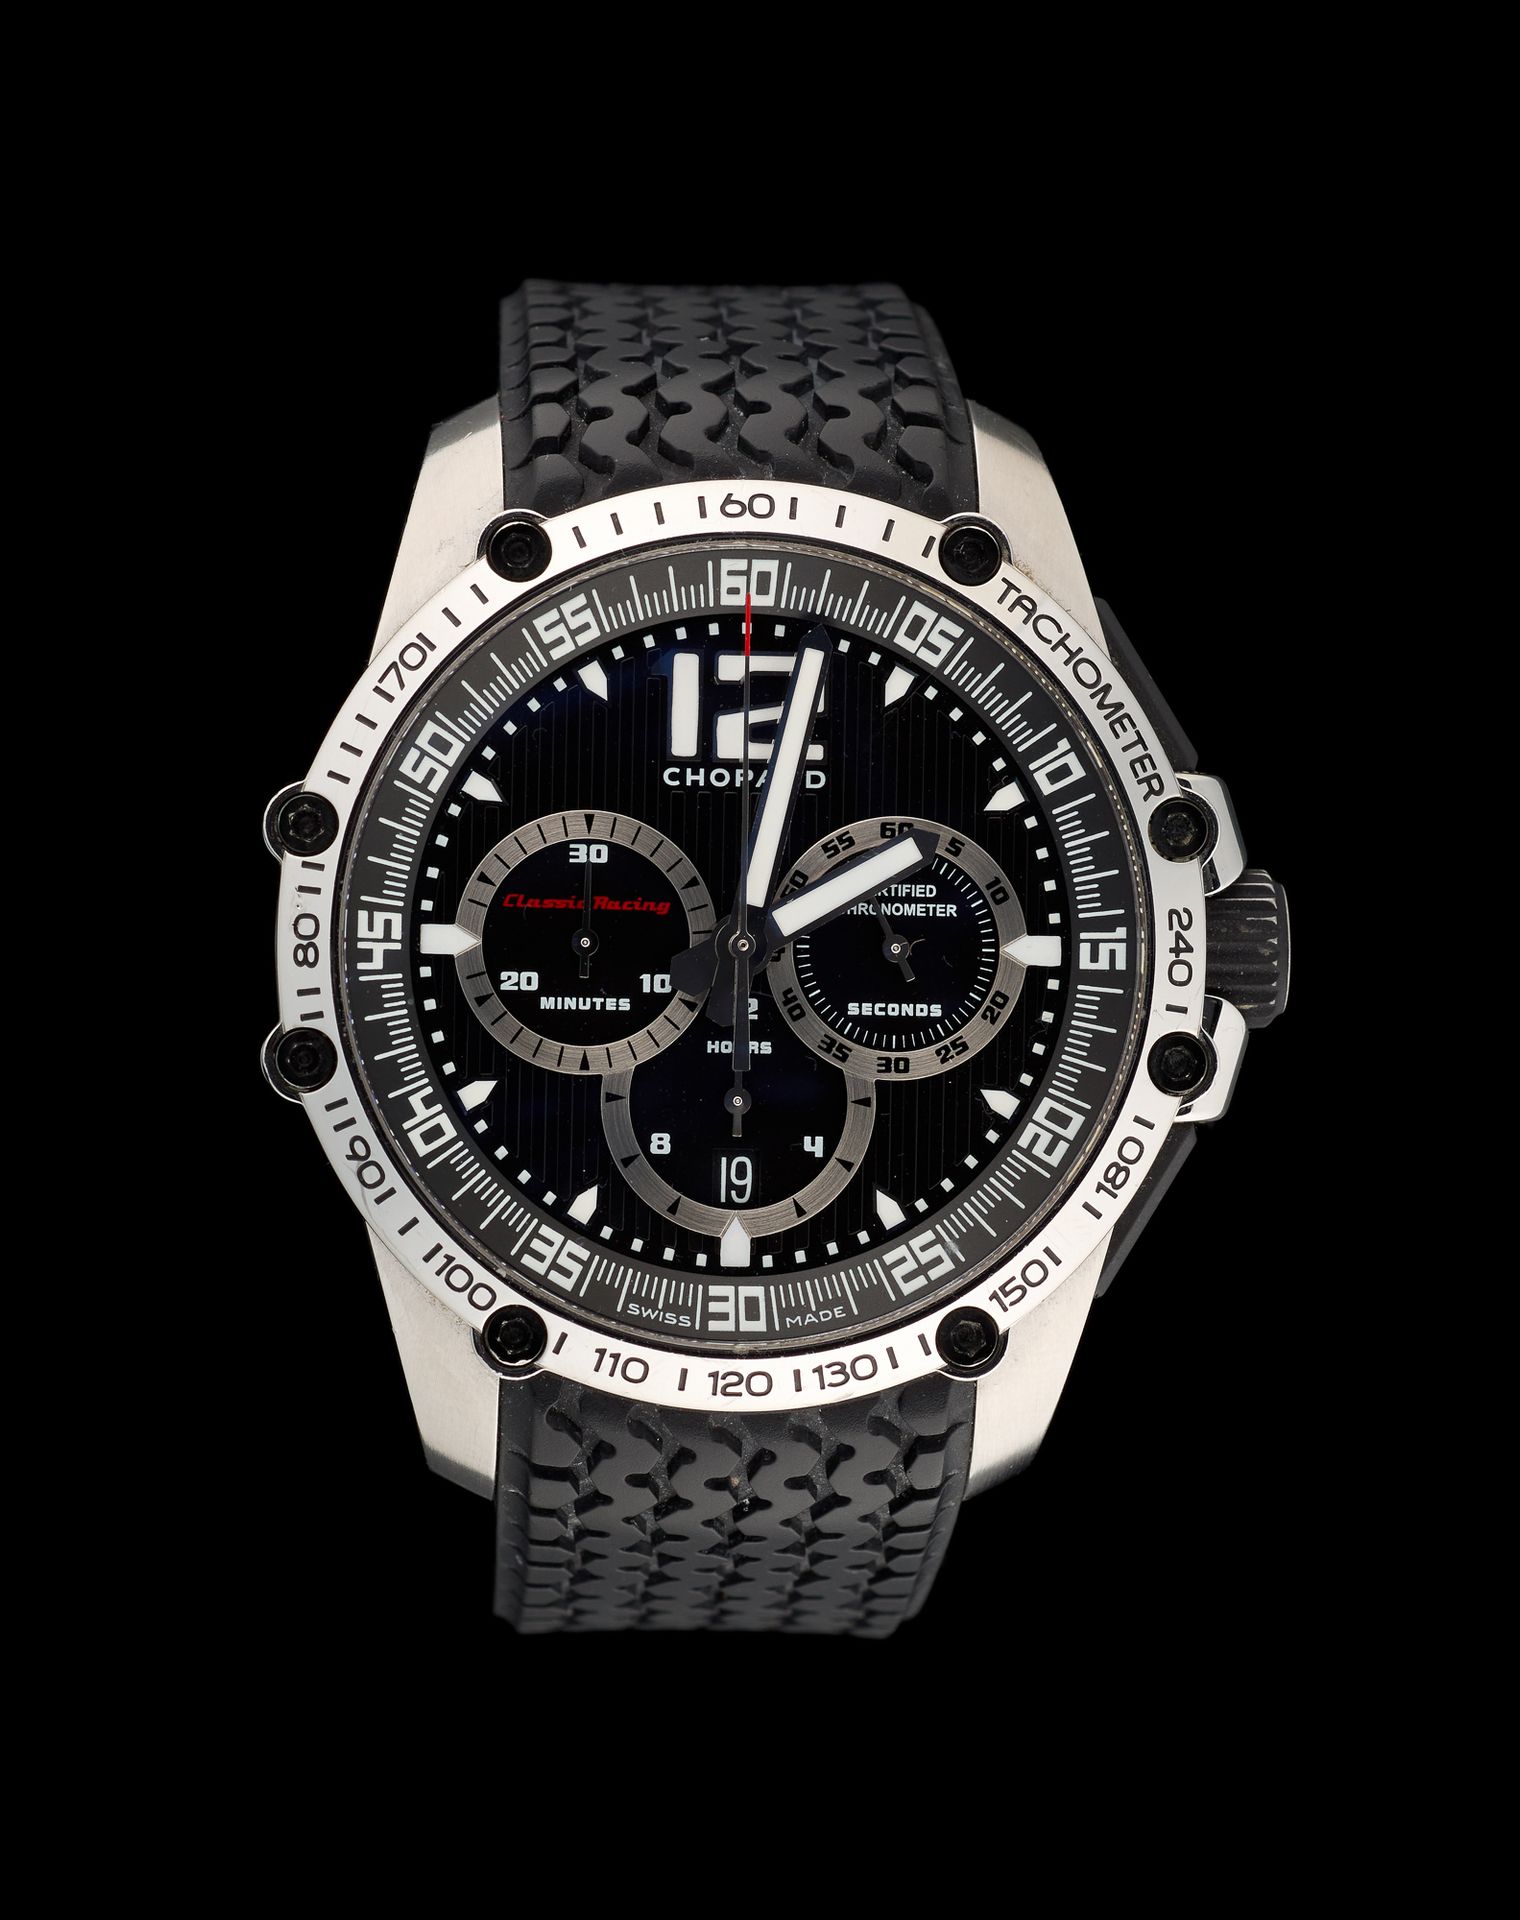 CHOPARD. Watches: Men's wristwatch in steel, automatic movement.

Chopard brand,&hellip;